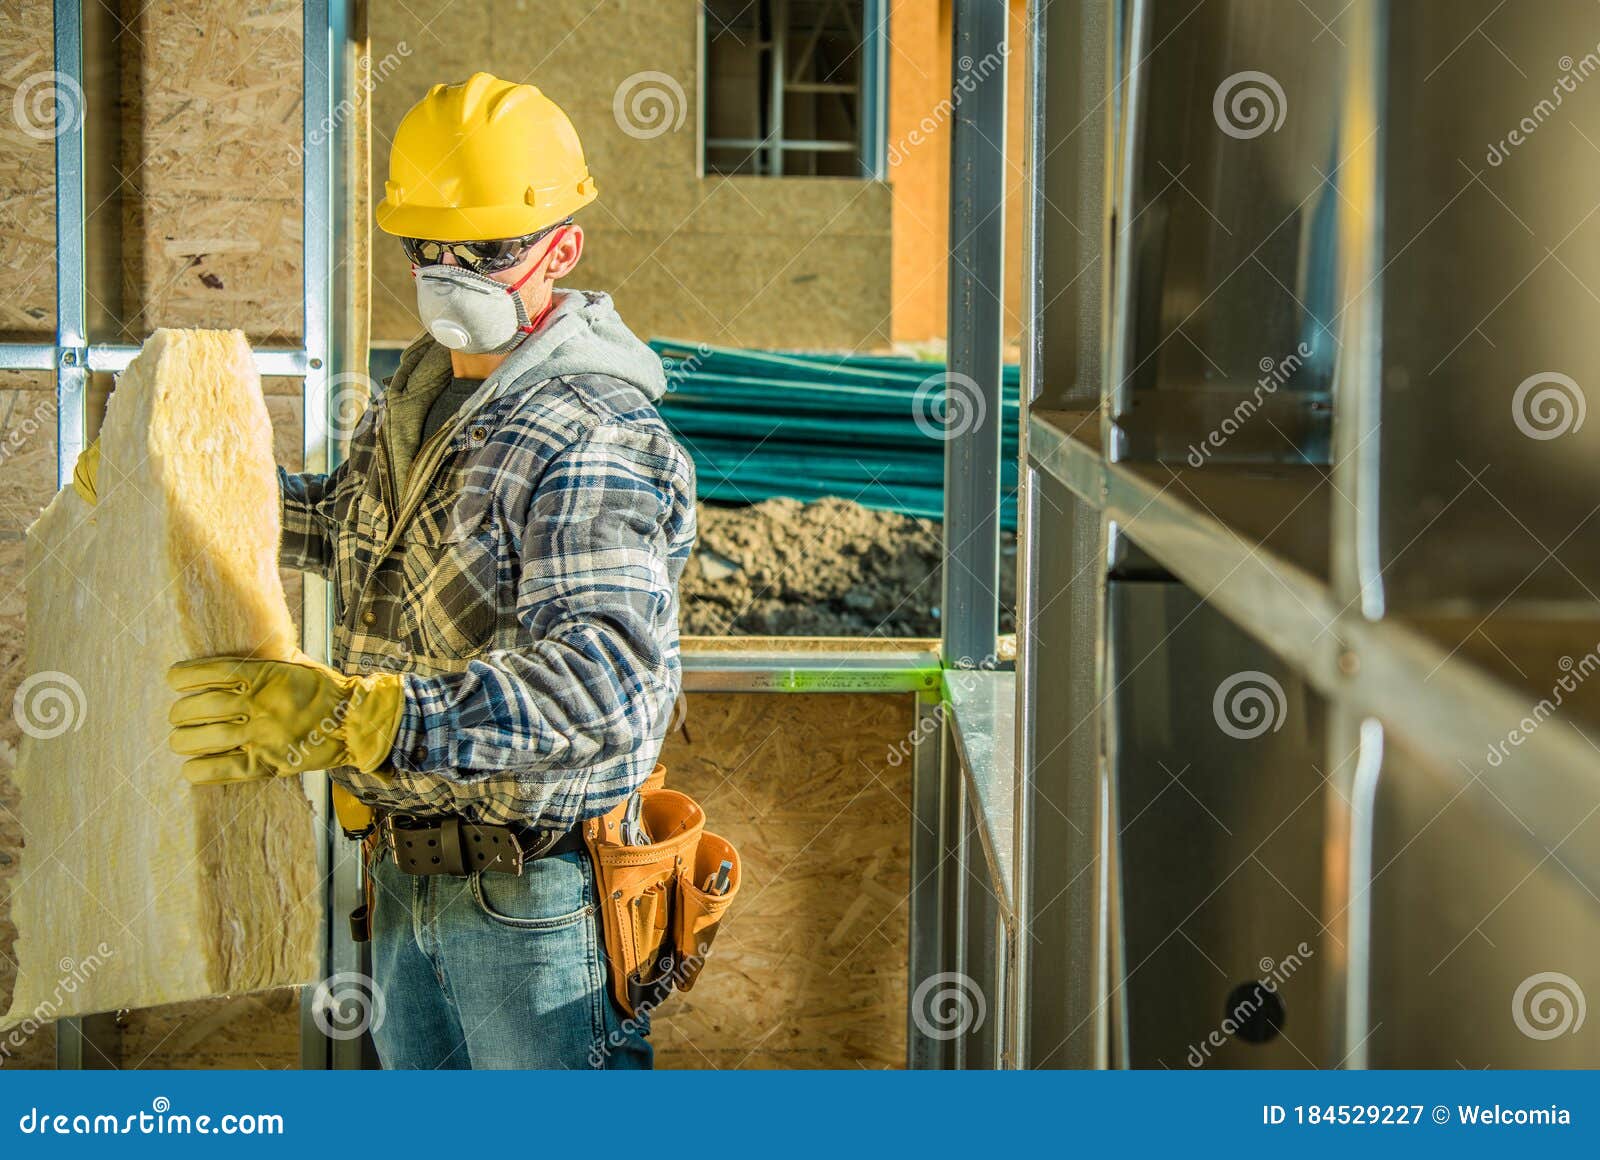 worker in safe breathing mask working inside developed building